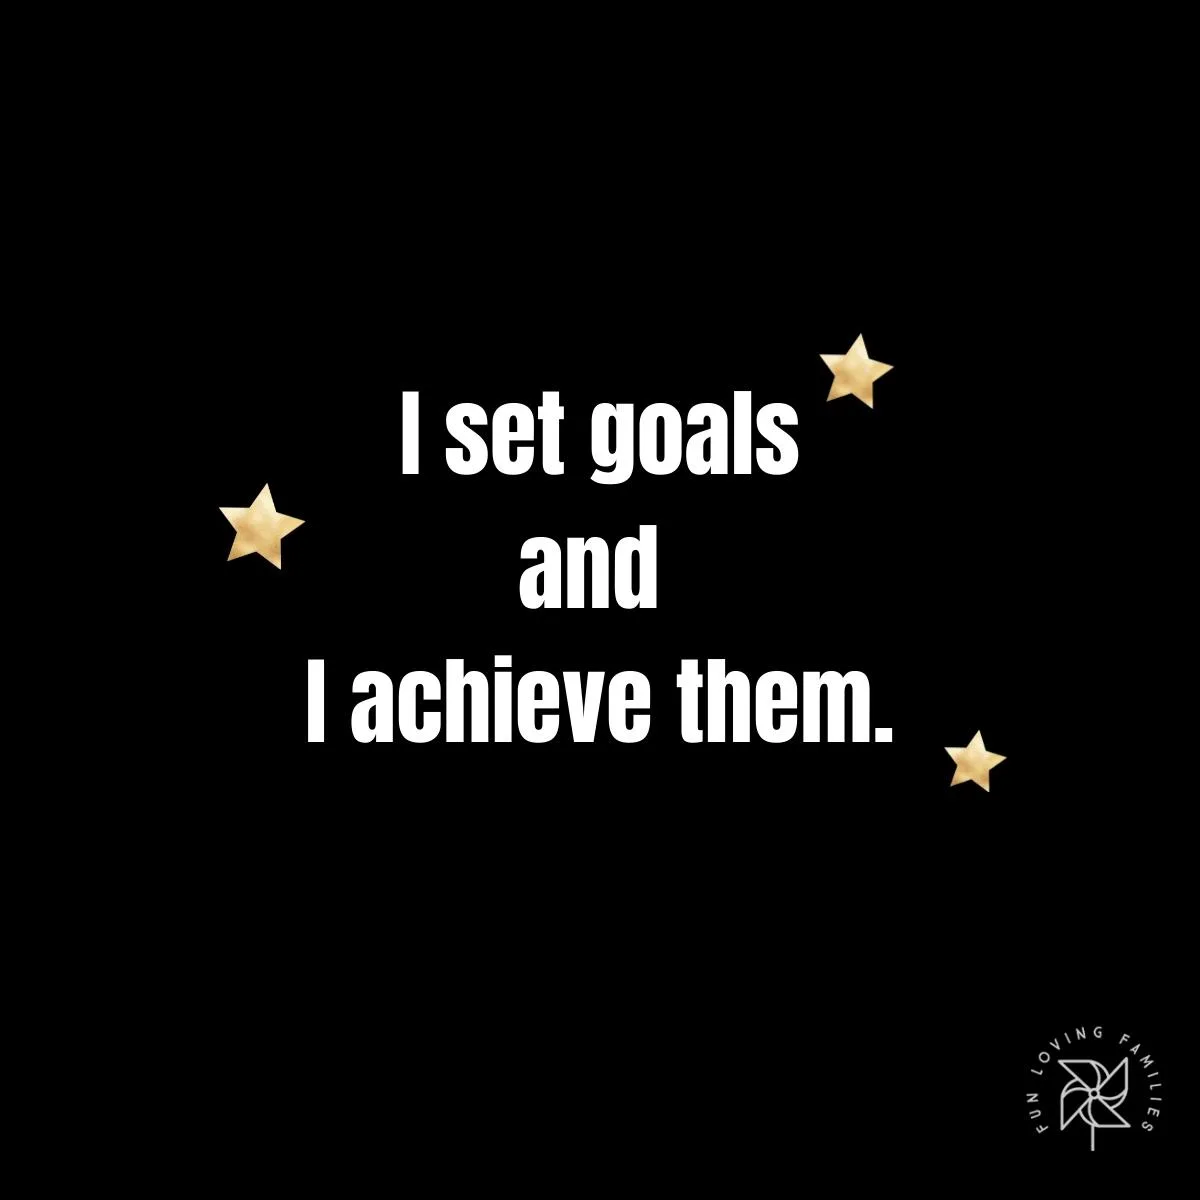 I set goals and I achieve them affirmation